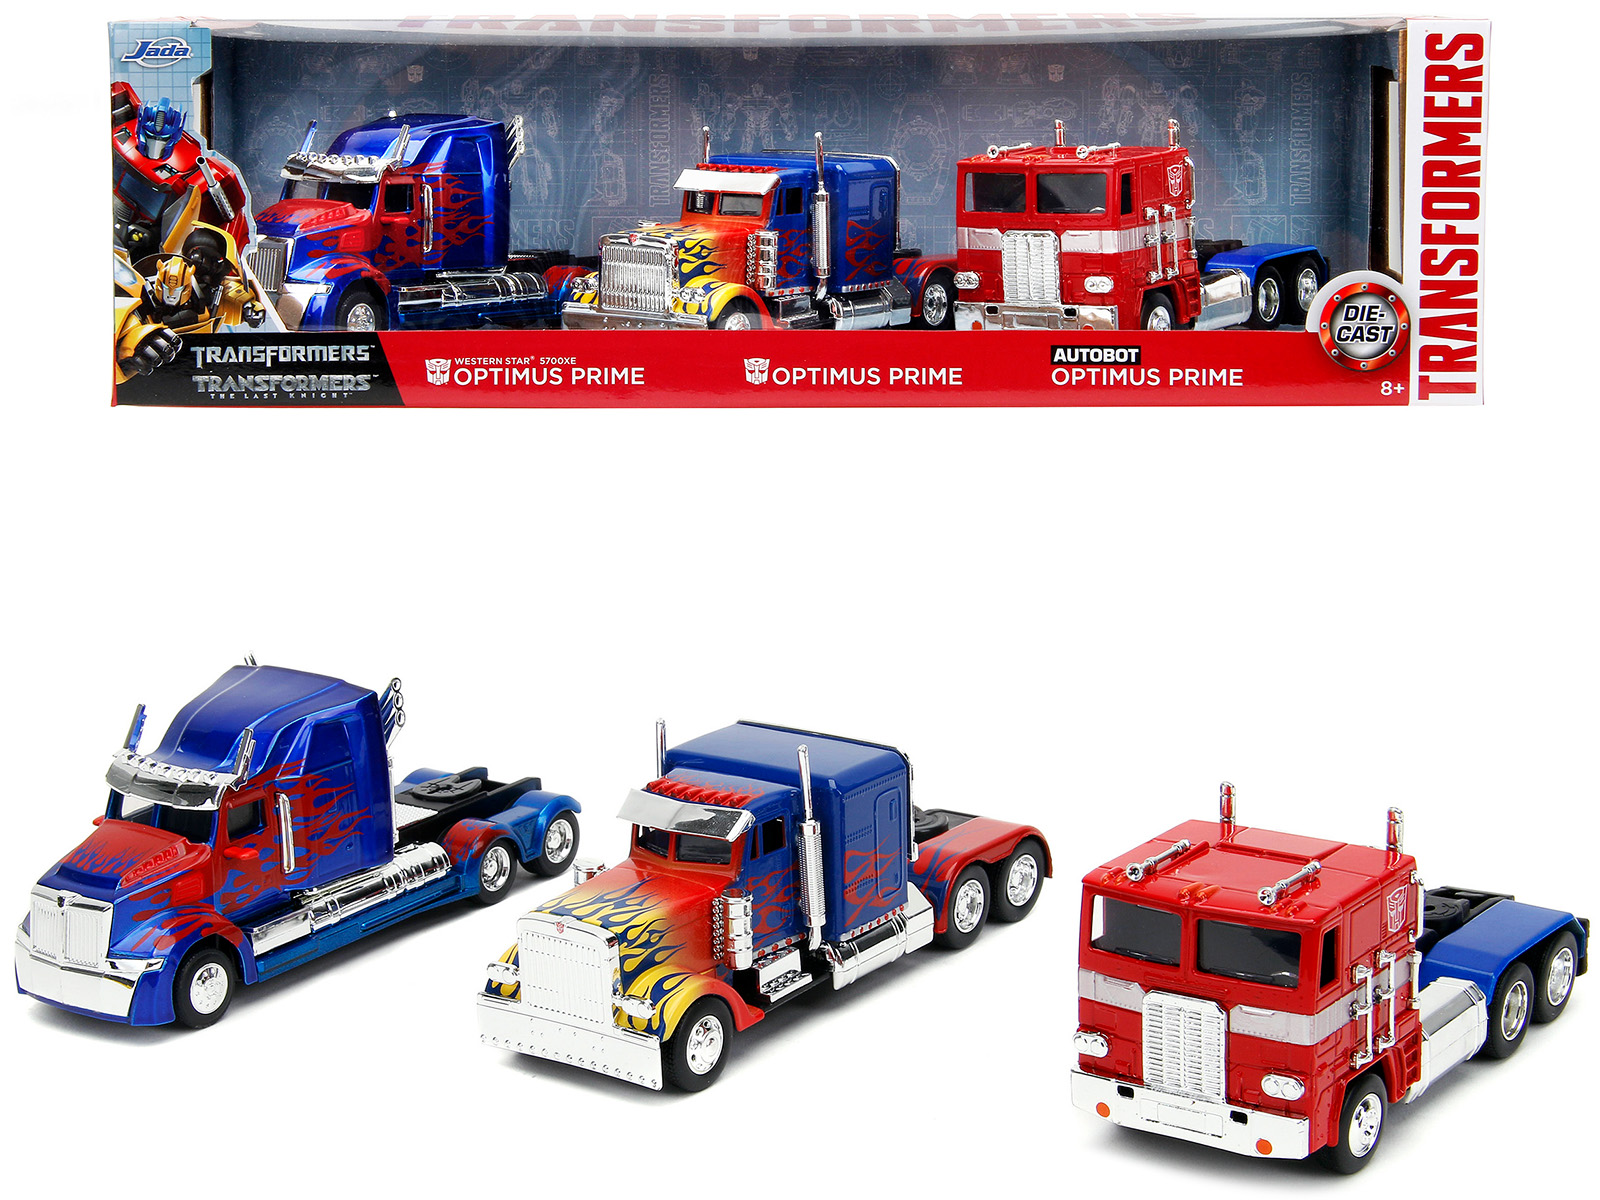 JADA "Transformers" Optimus Prime Trucks Set of 3 pieces "Hollywood Rides" Series 1/32 Diecast Model Cars by Jada